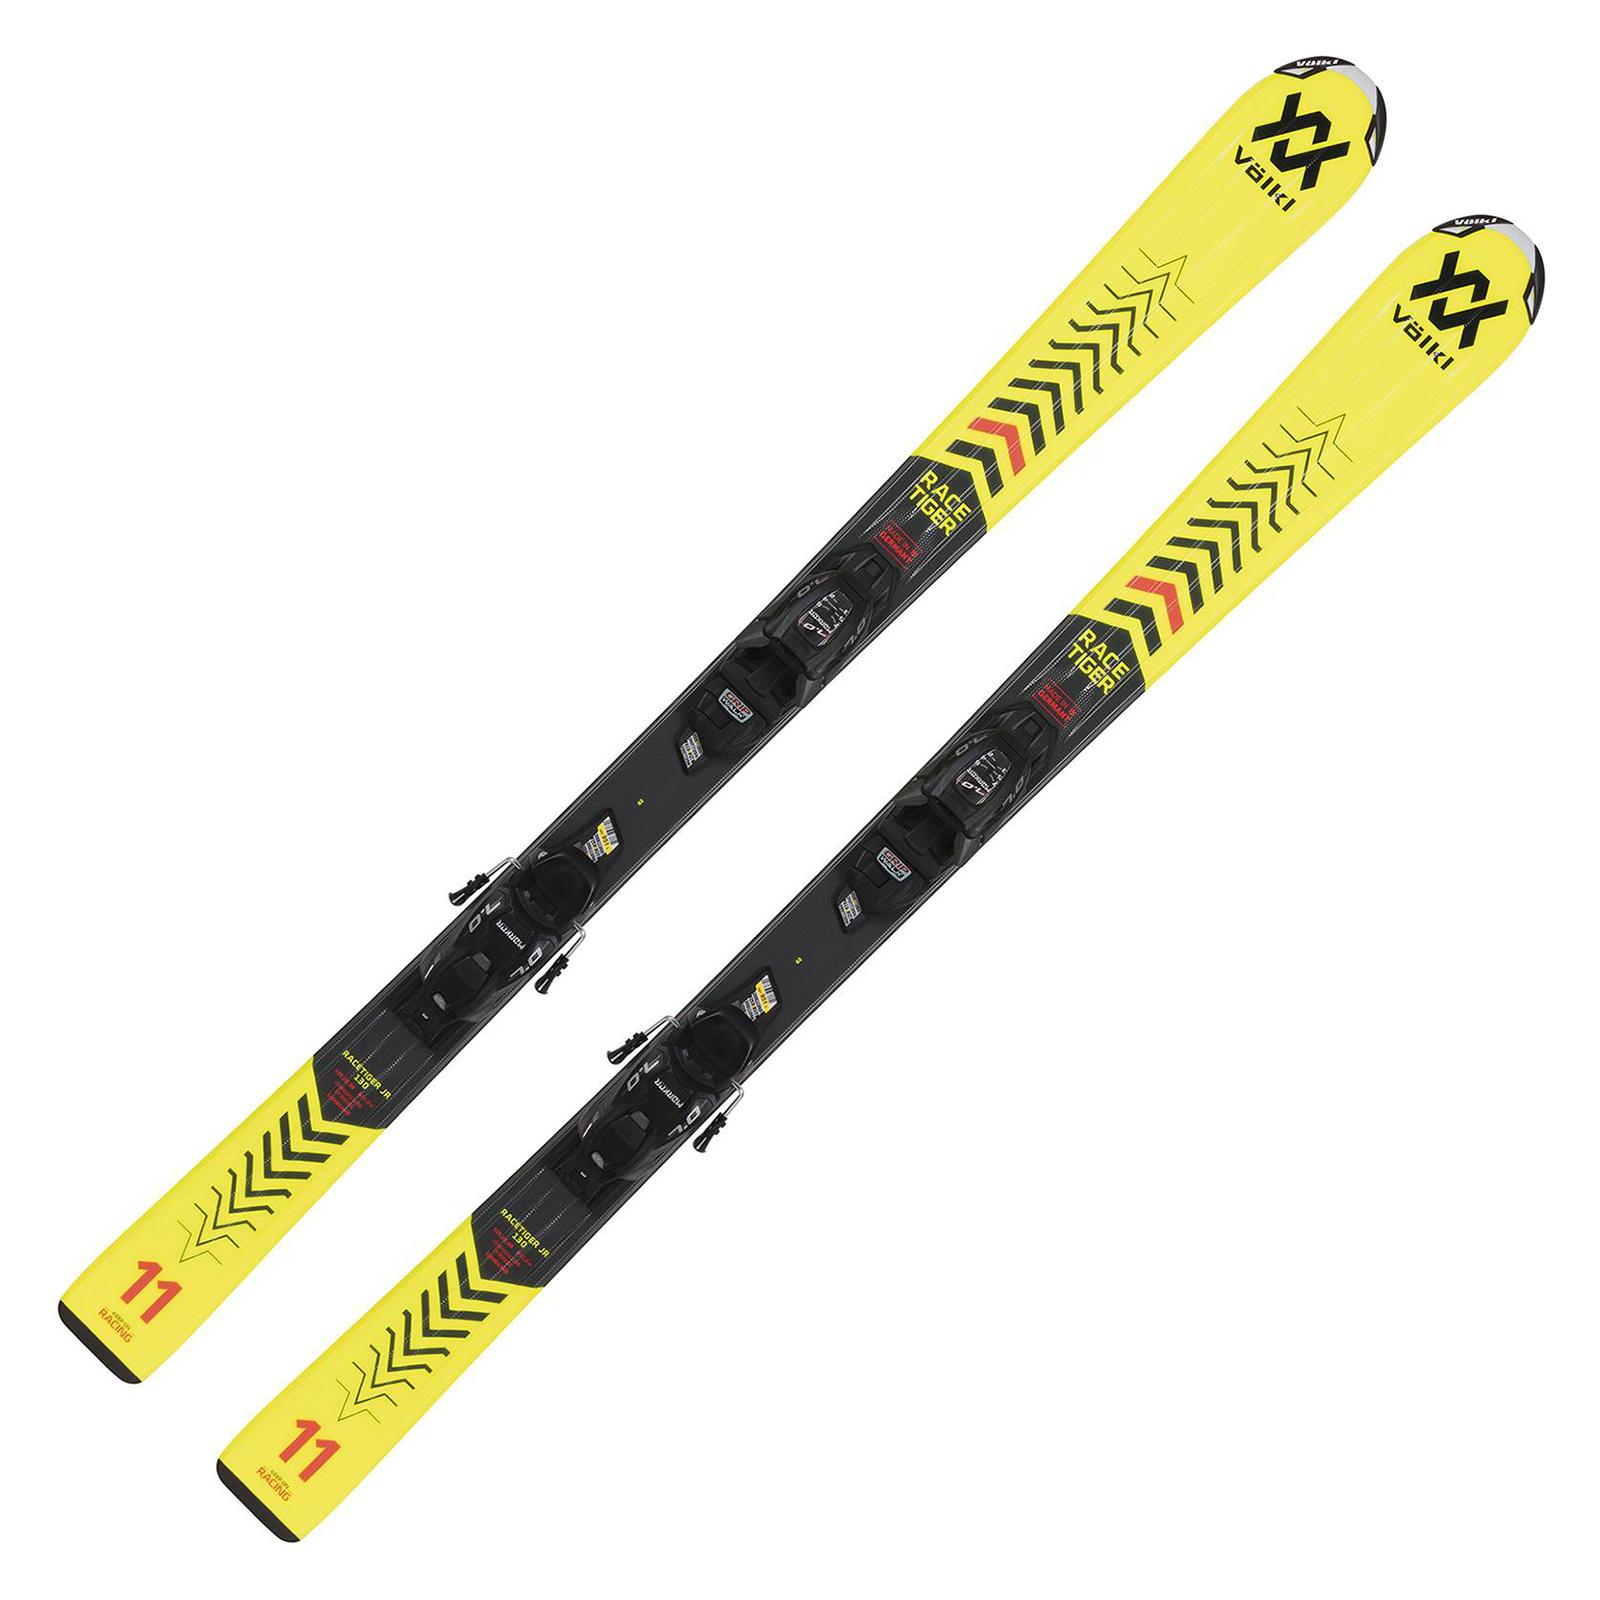 Völkl Racetiger yellow 130-150cm Junior Ski 2022/23